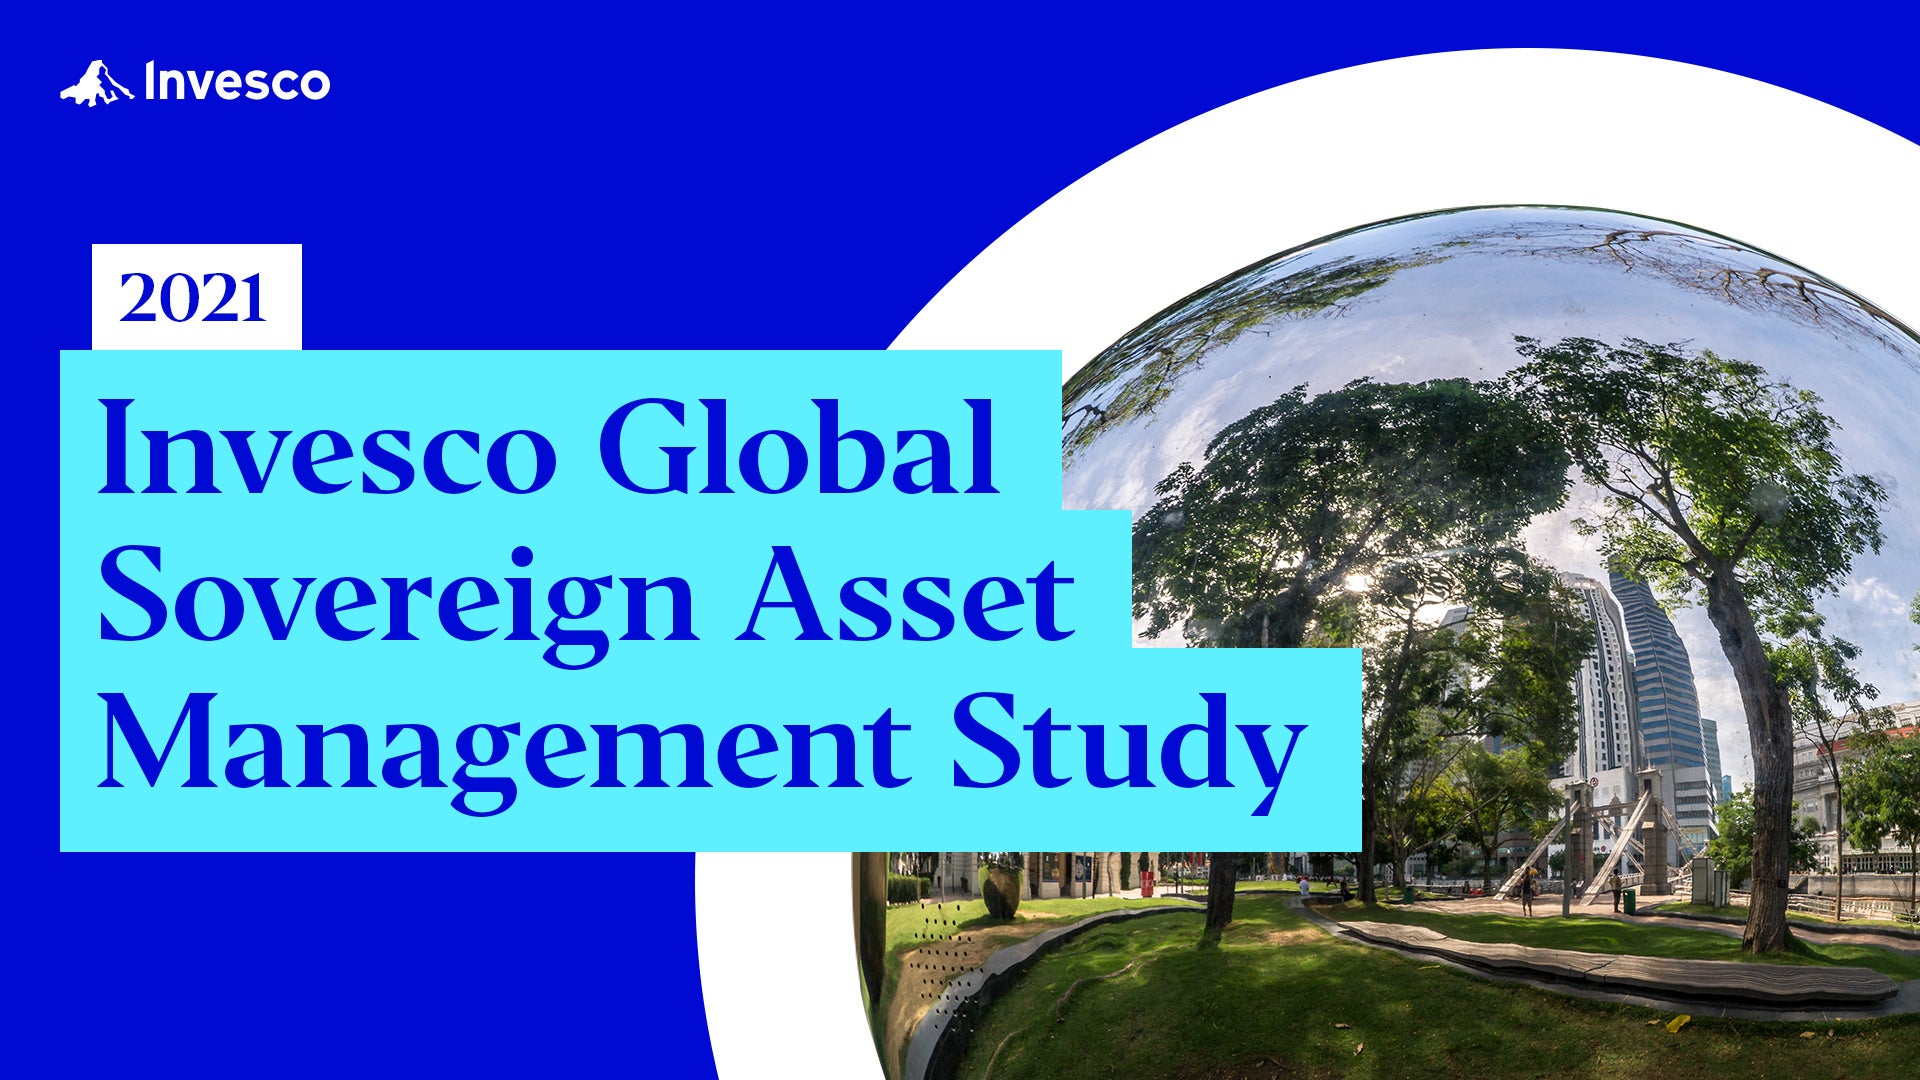 Invesco Global Sovereign Asset Management Study 2021